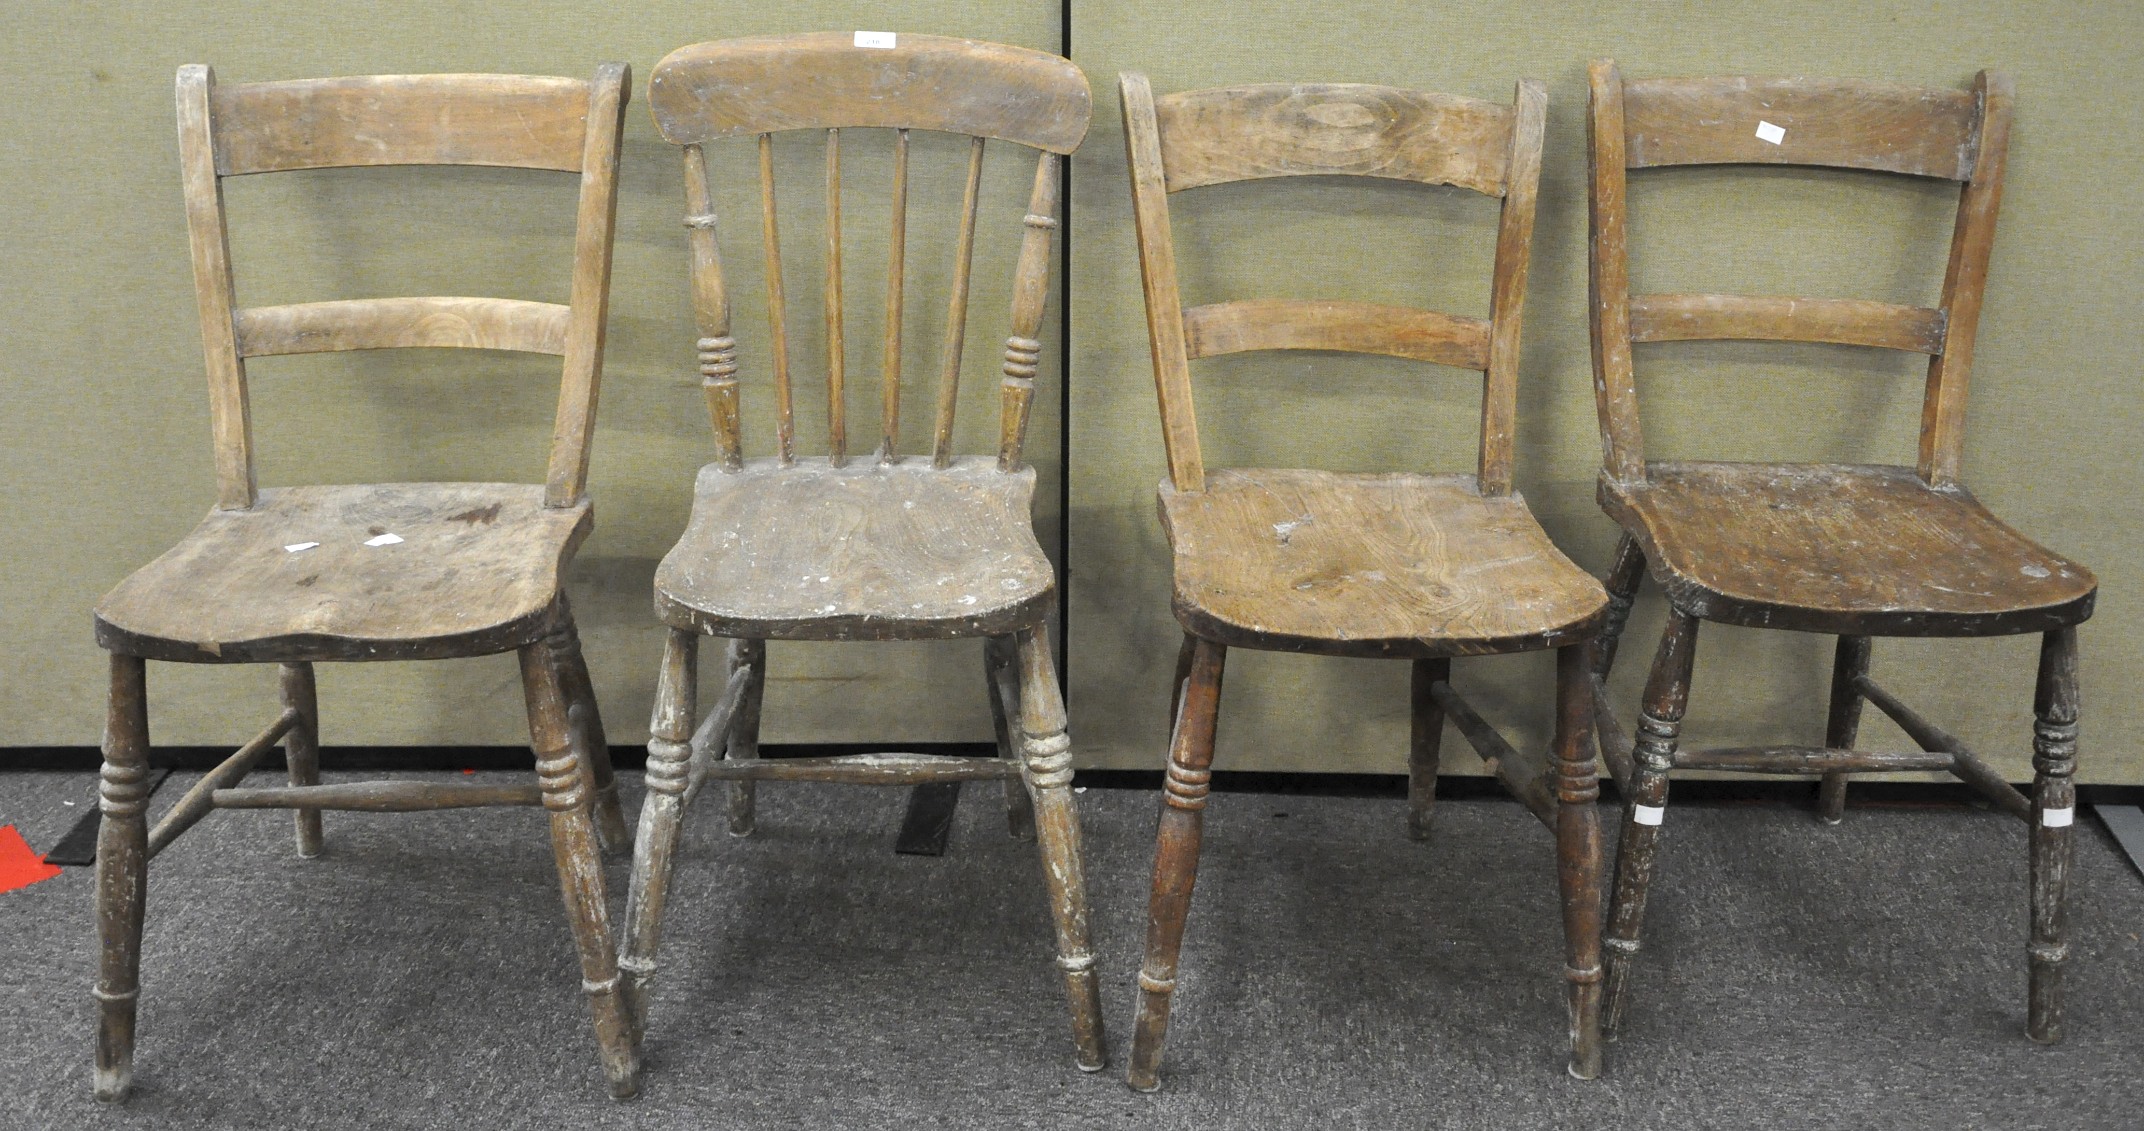 Four oak kitchen chairs,